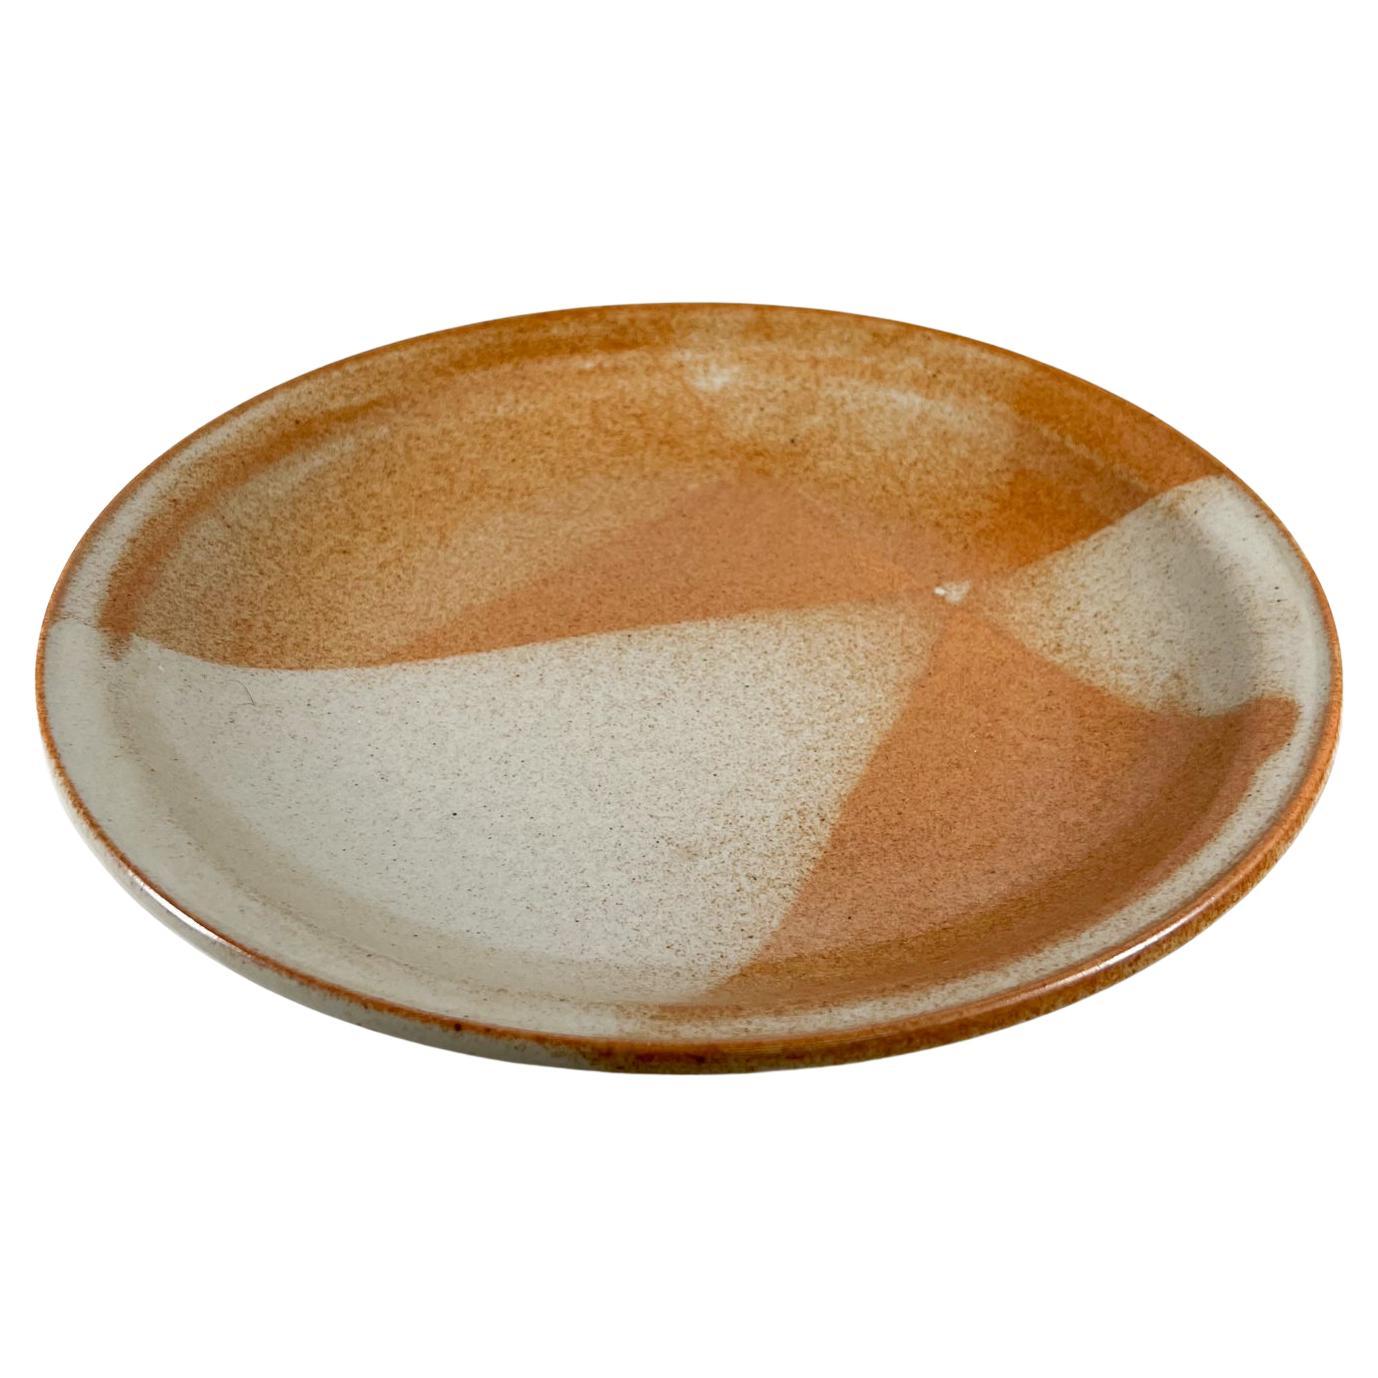 1960s Modern Stoneware Pottery Serving Dish Sectional Glaze